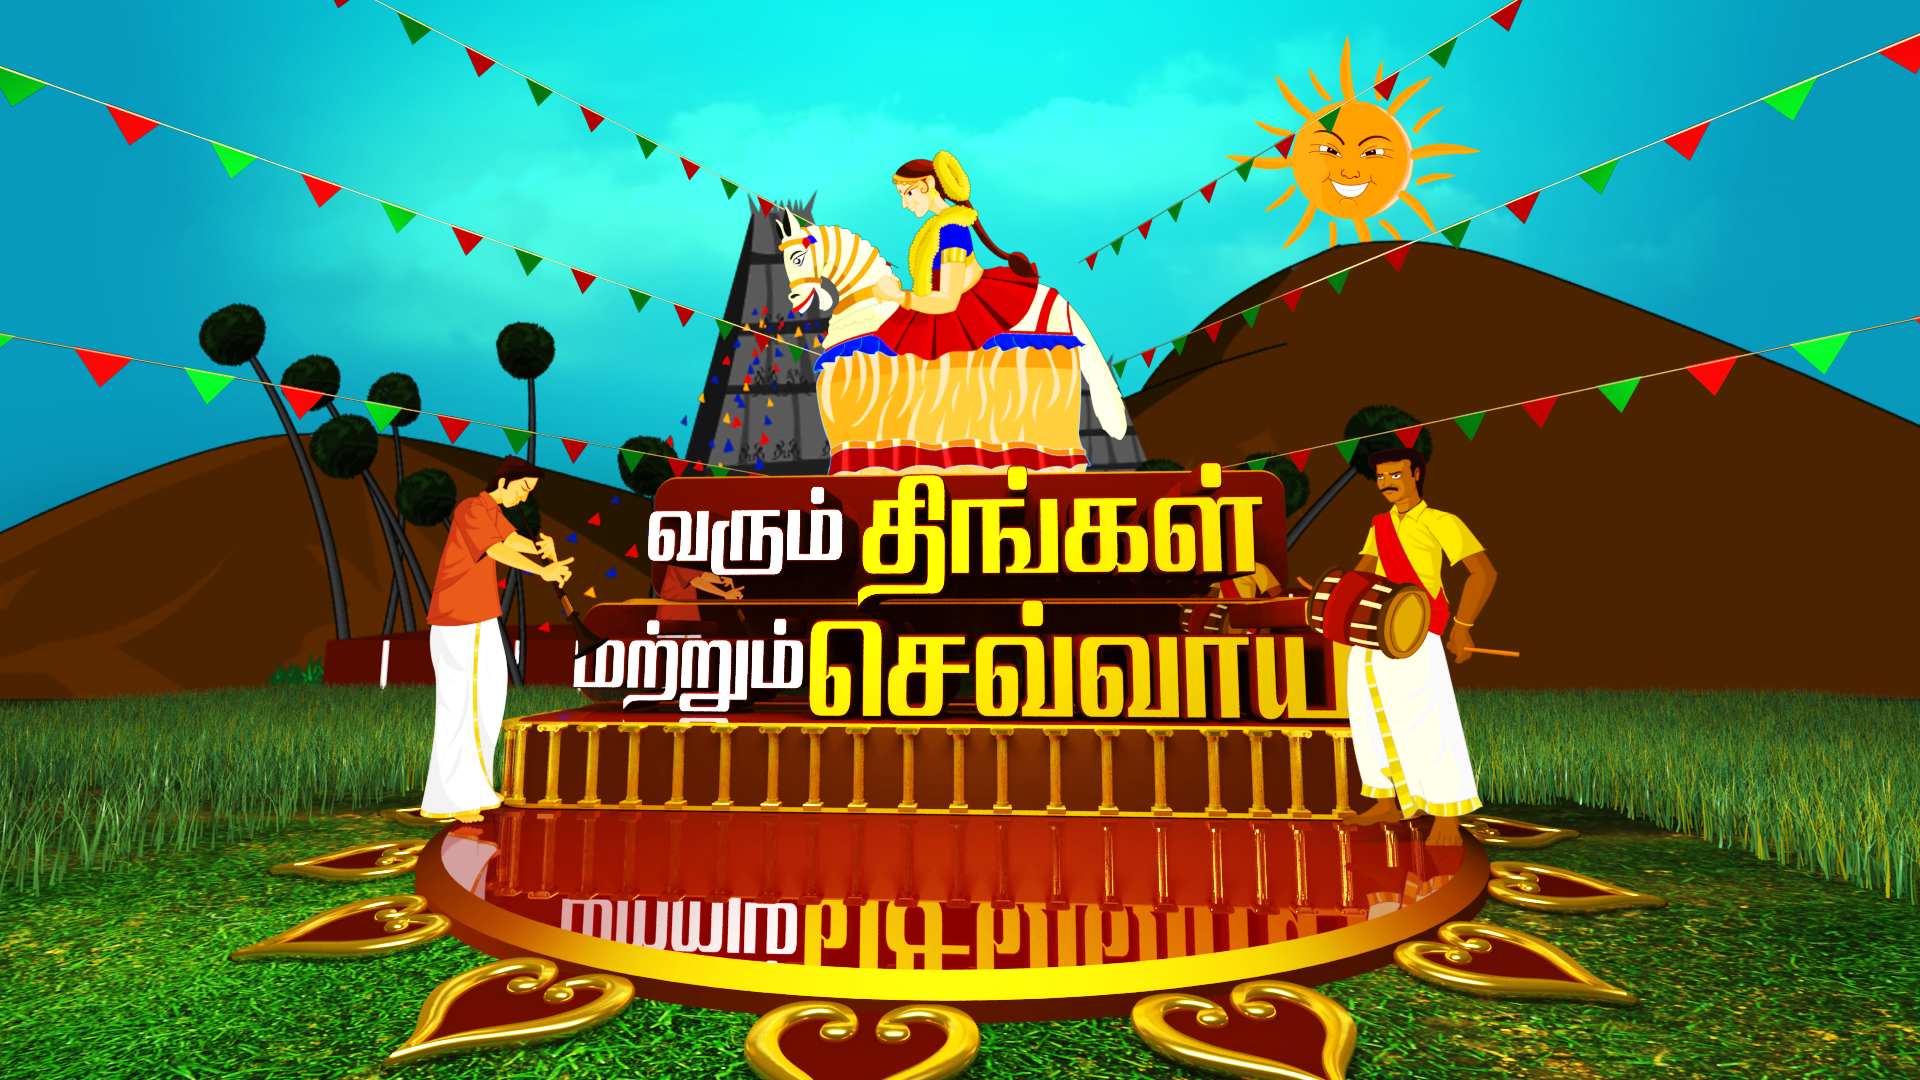 Happy Pongal Tamil Image Download 1920×1080